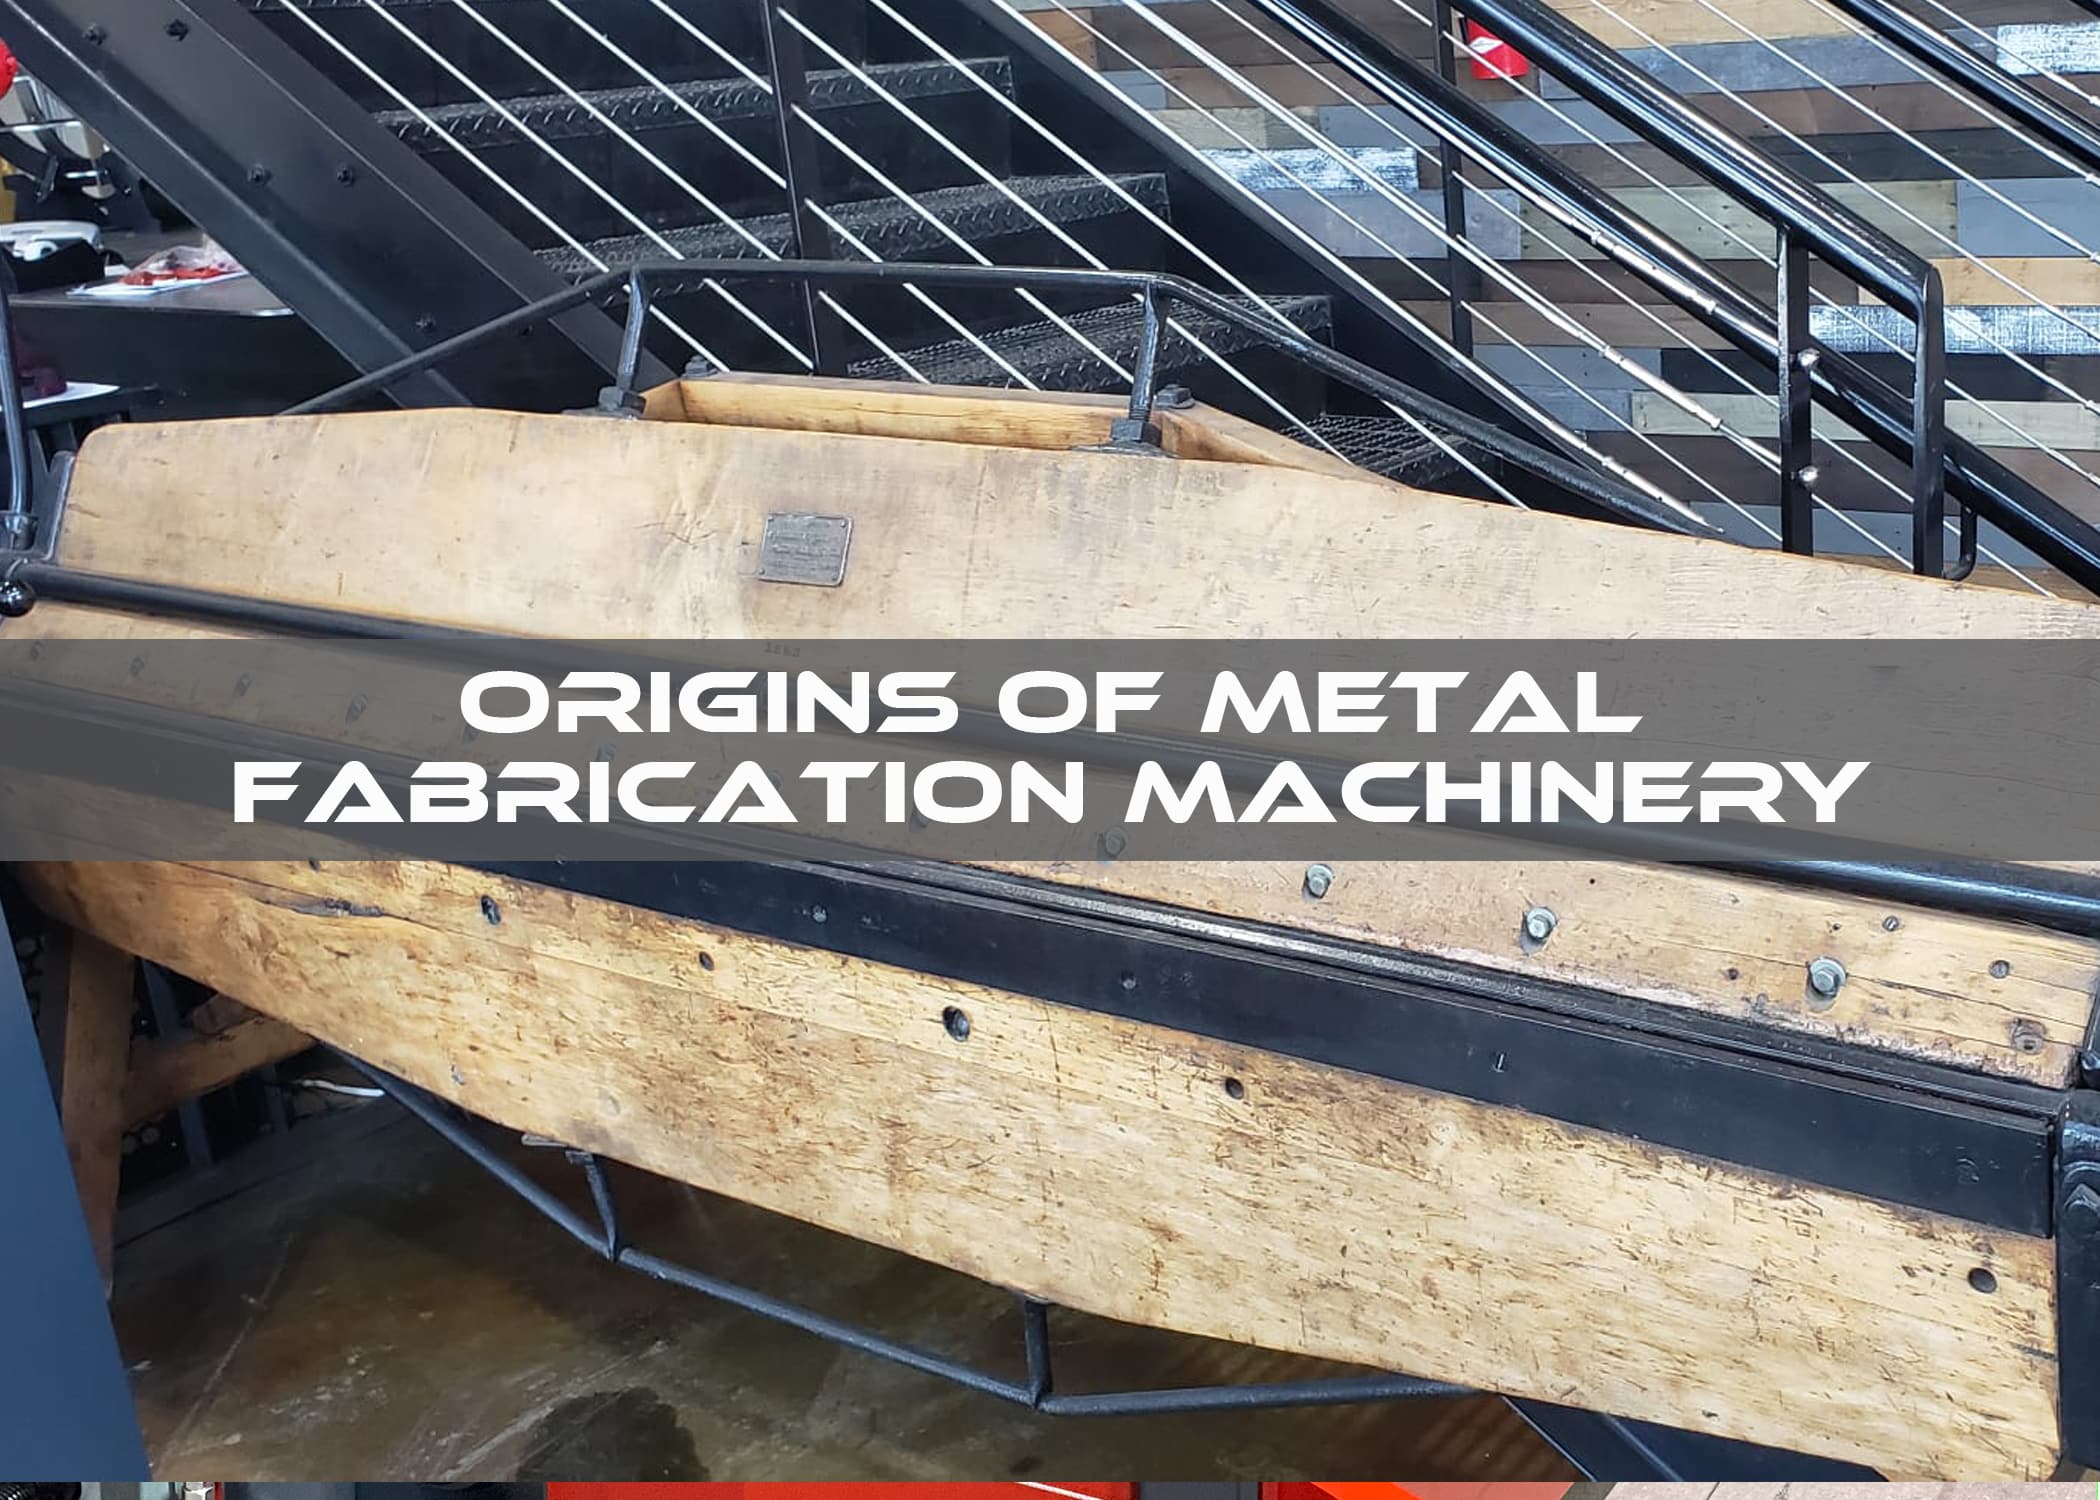 Origins of Metal Fabrication Machinery